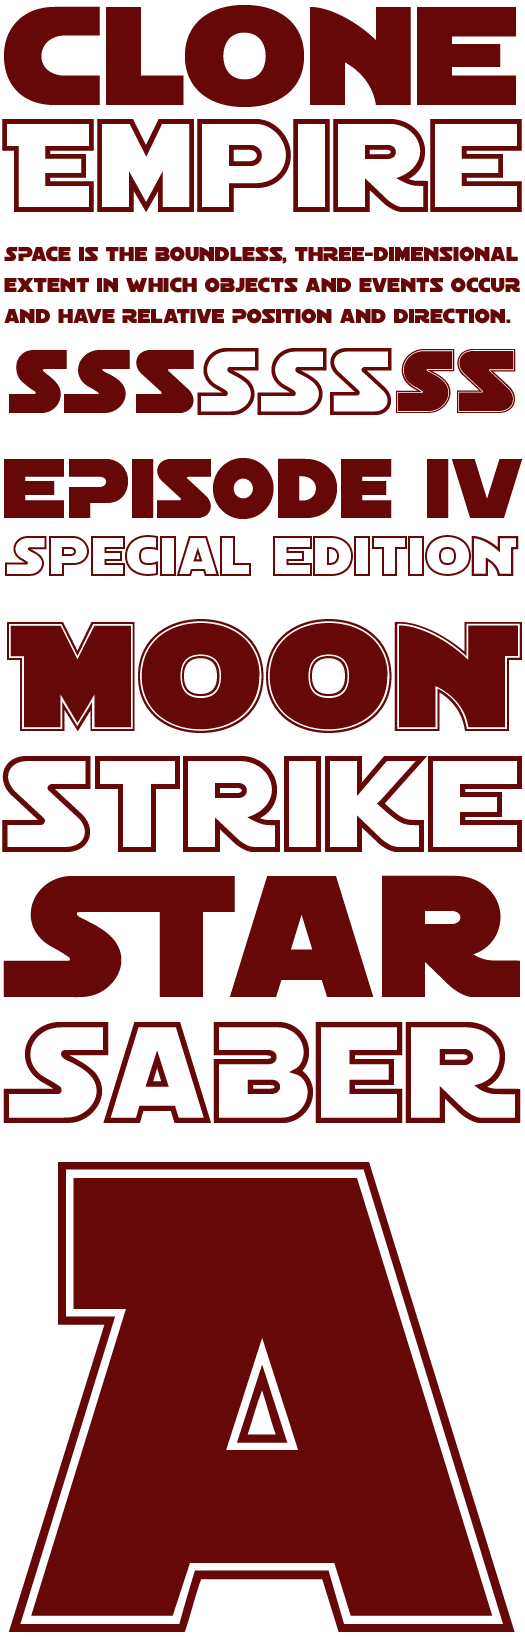 Star Wars font - Astro font - by David Occhino Design - Sample